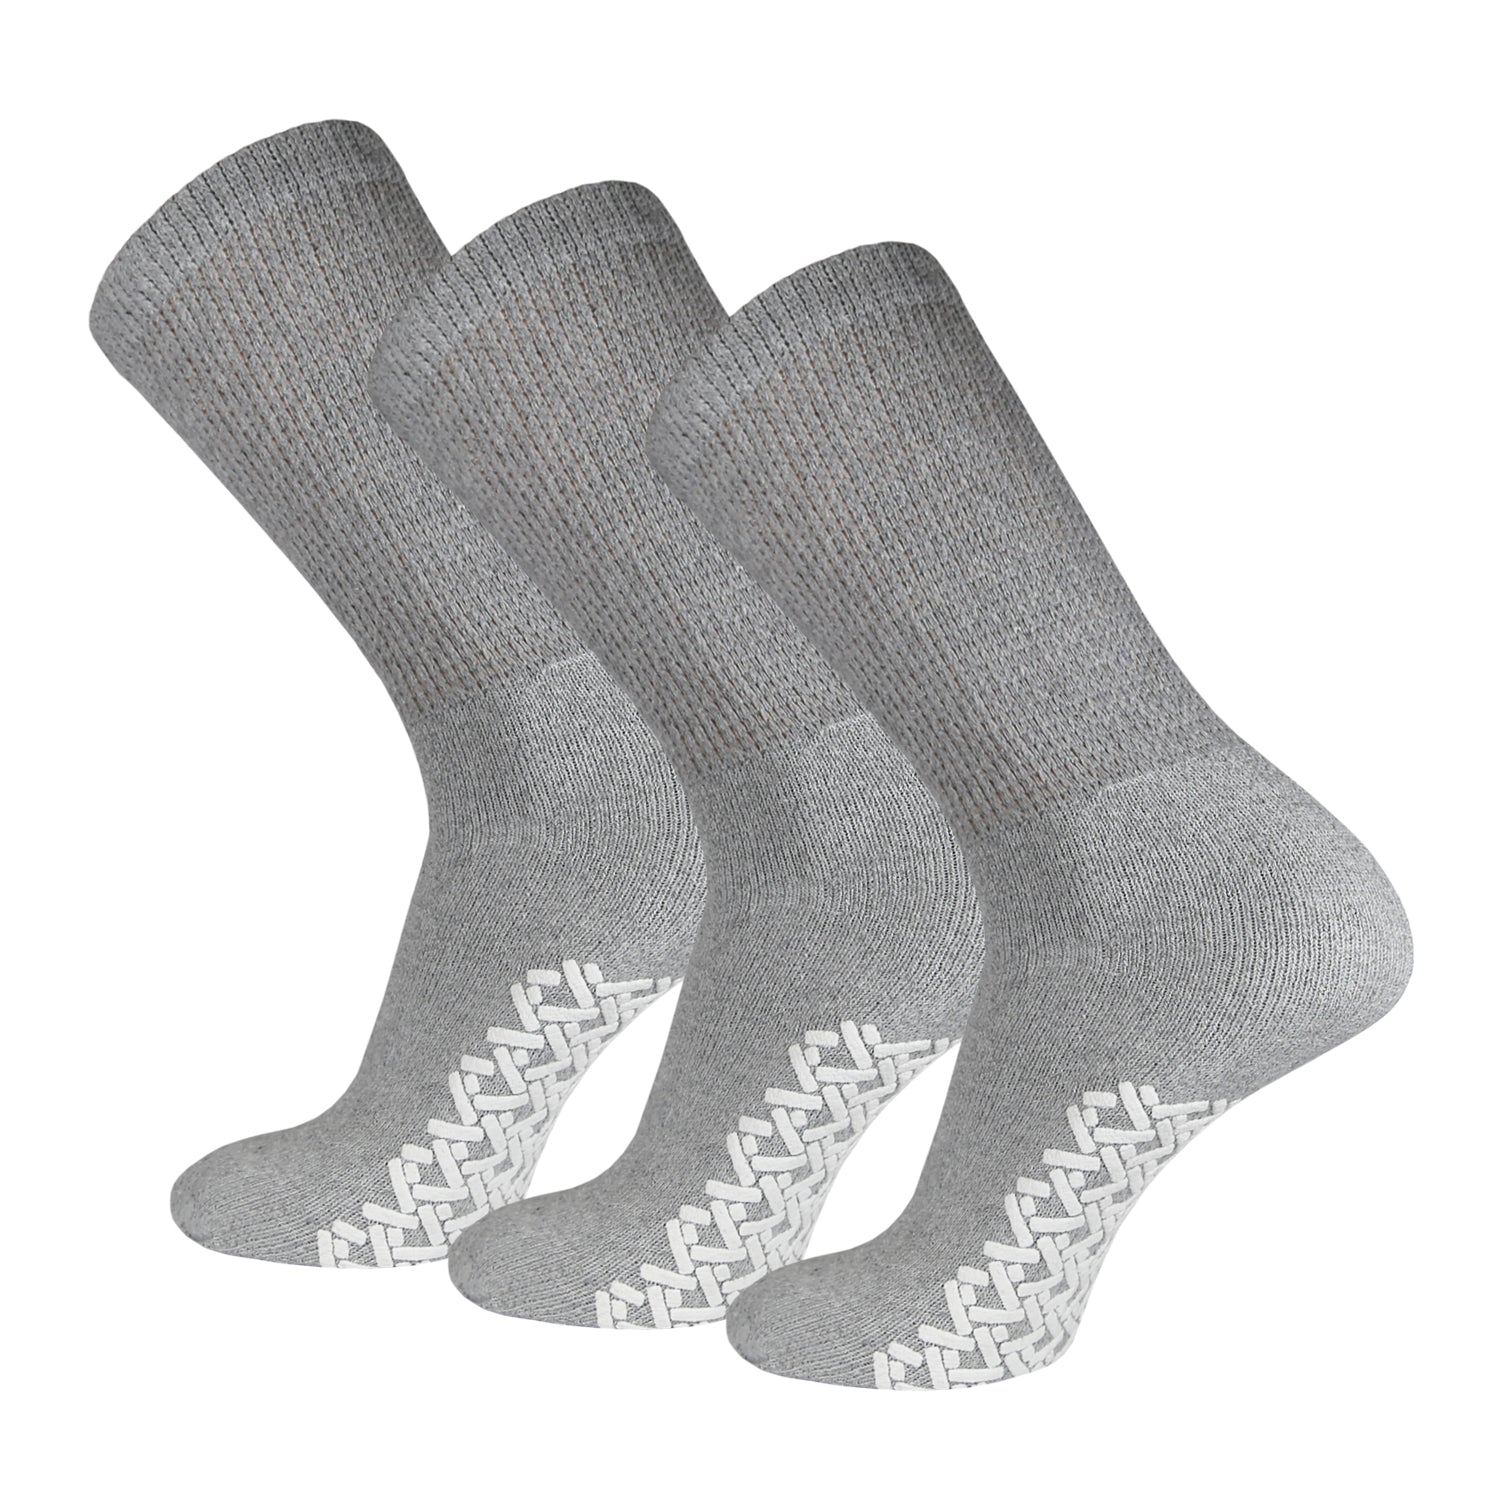 Non-Skid Crew Socks Gray Diabetic Socks With White Rubber Grips On The Bottom 3 Pairs